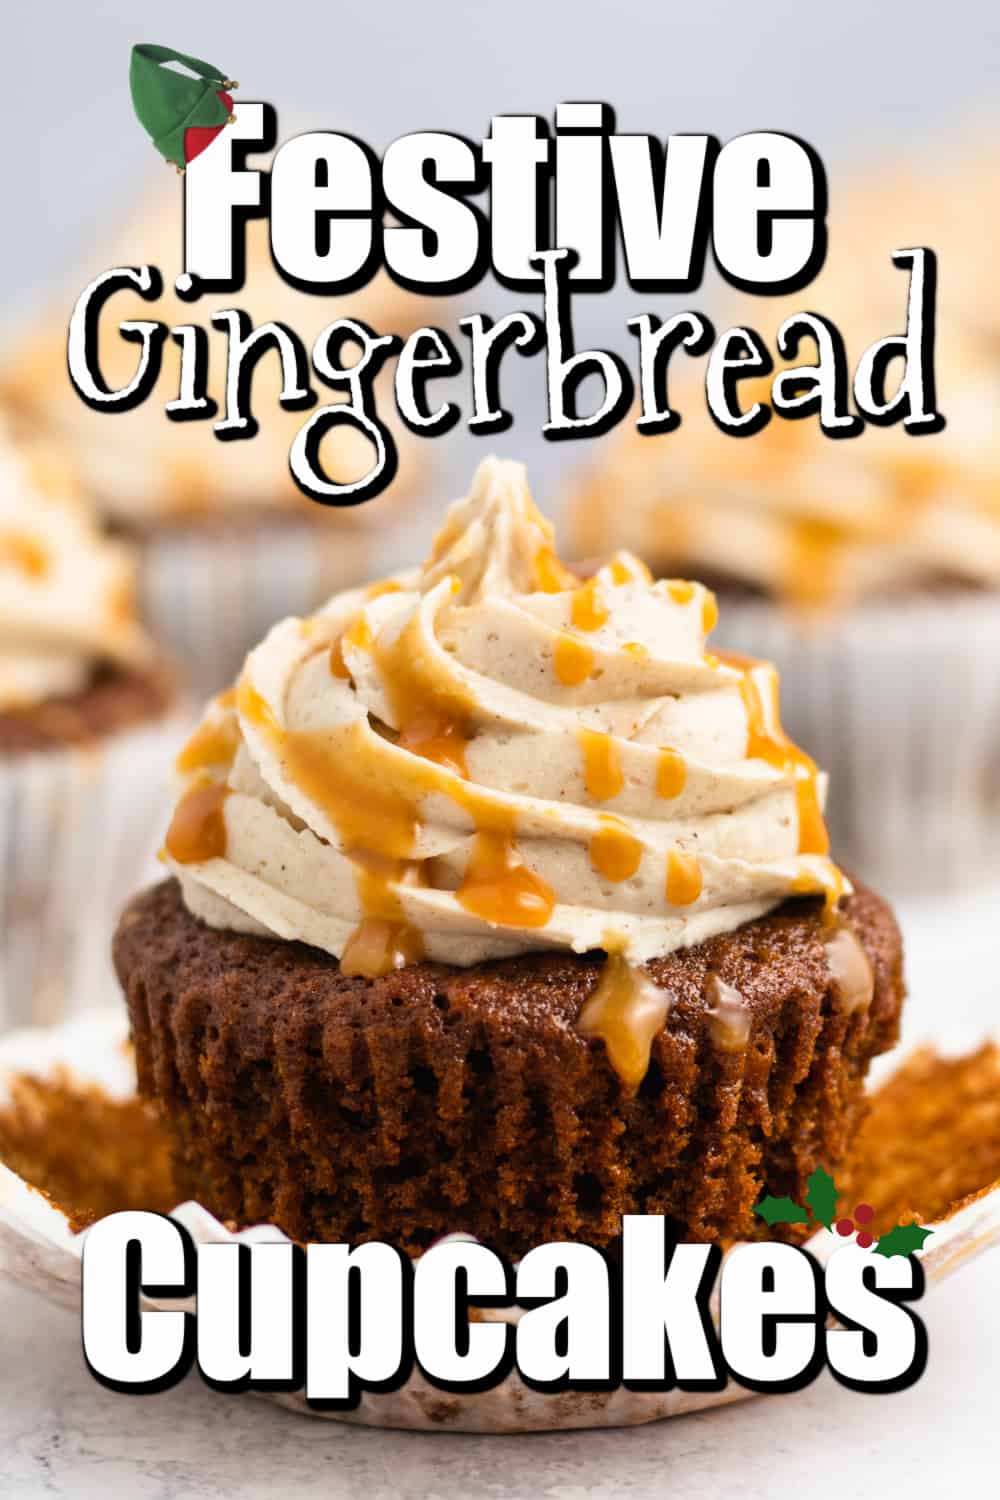 Festive Gingerbread Cupcakes Pin